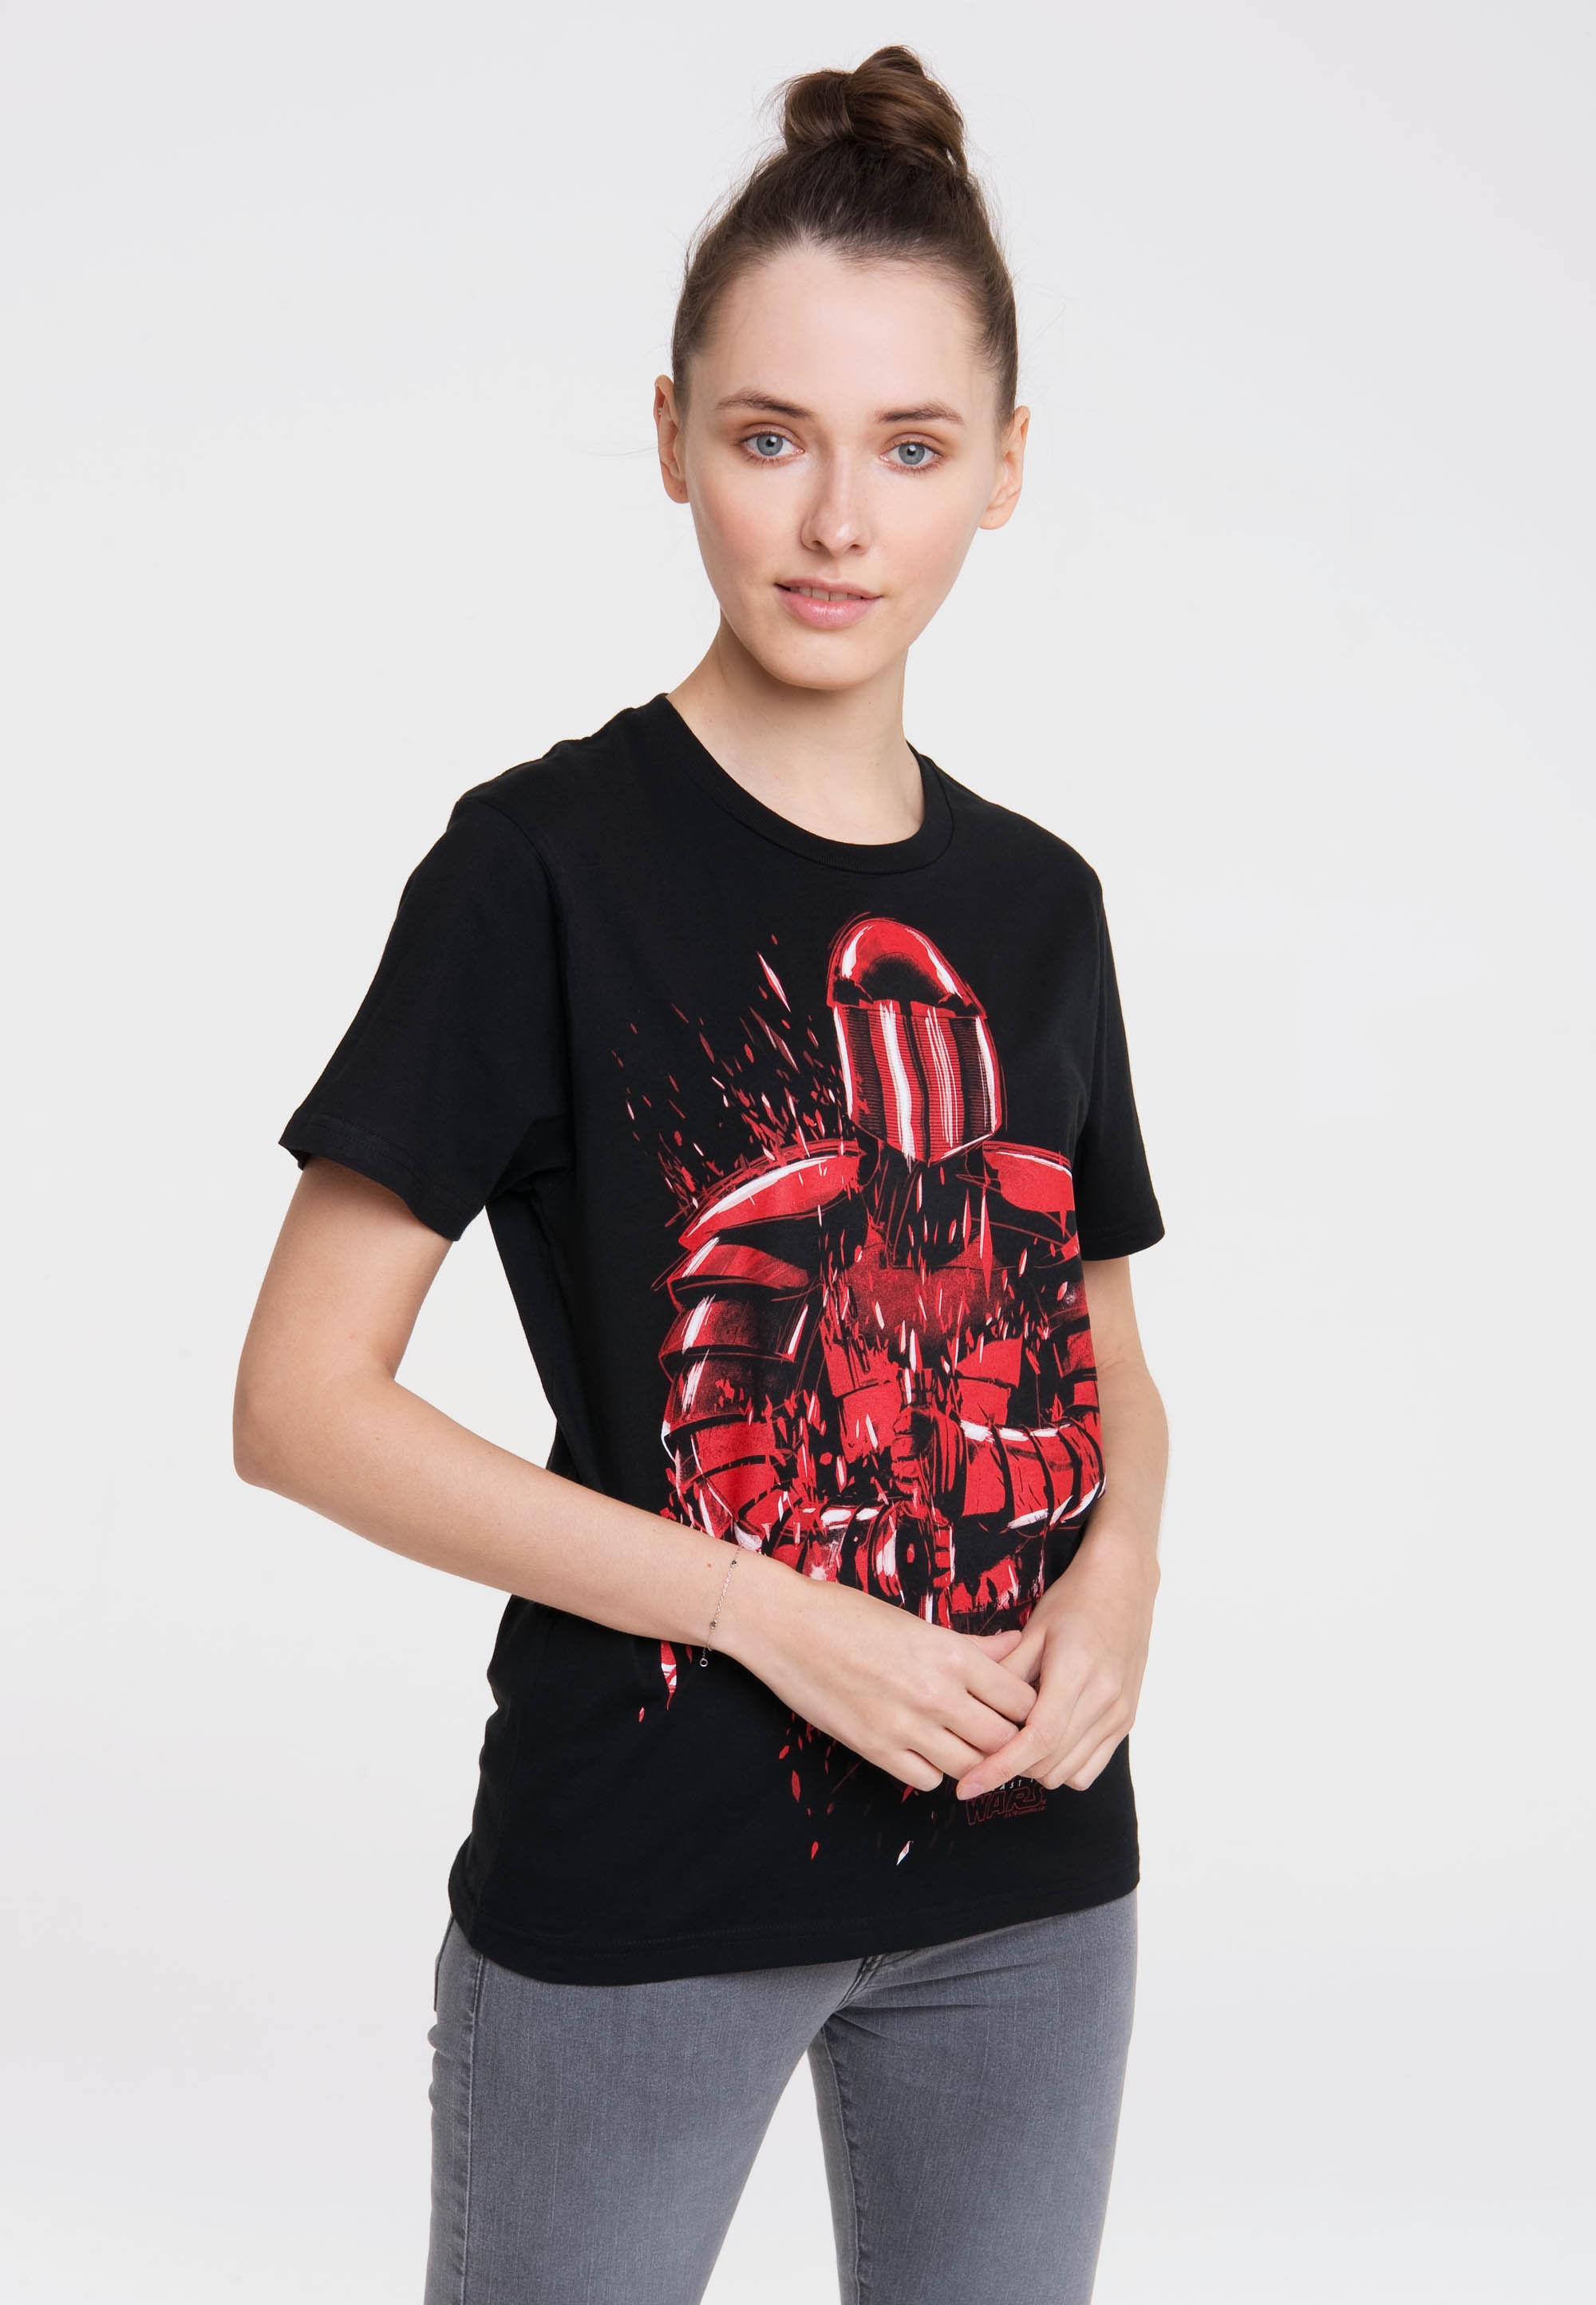 I\'m | walking Originaldesign online T-Shirt mit LOGOSHIRT Wars«, »Star lizenziertem